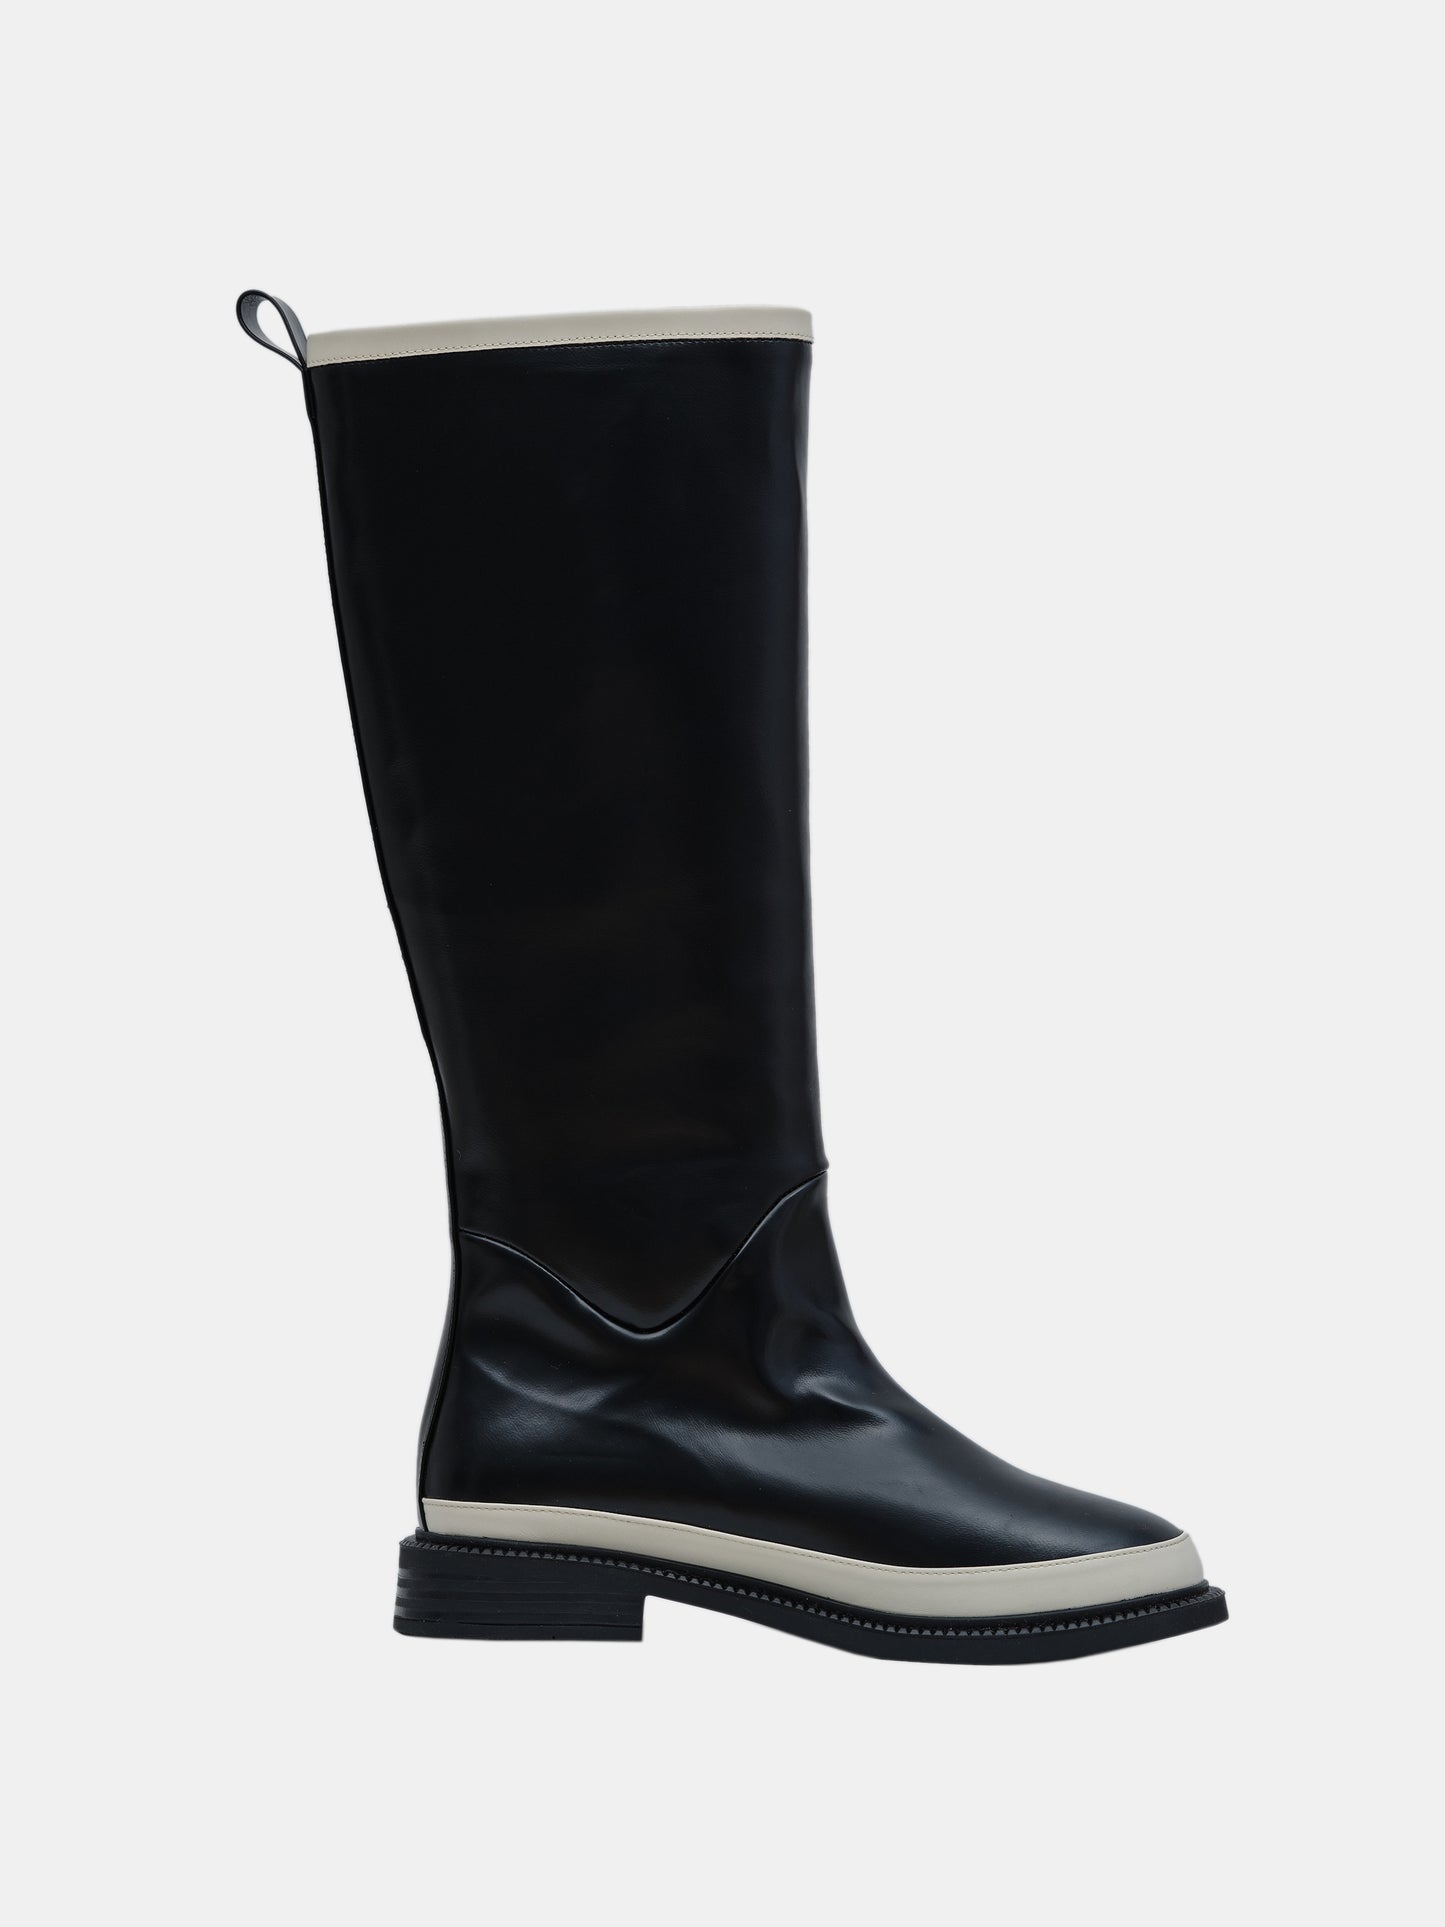 Contrast Wellington Boots, Black